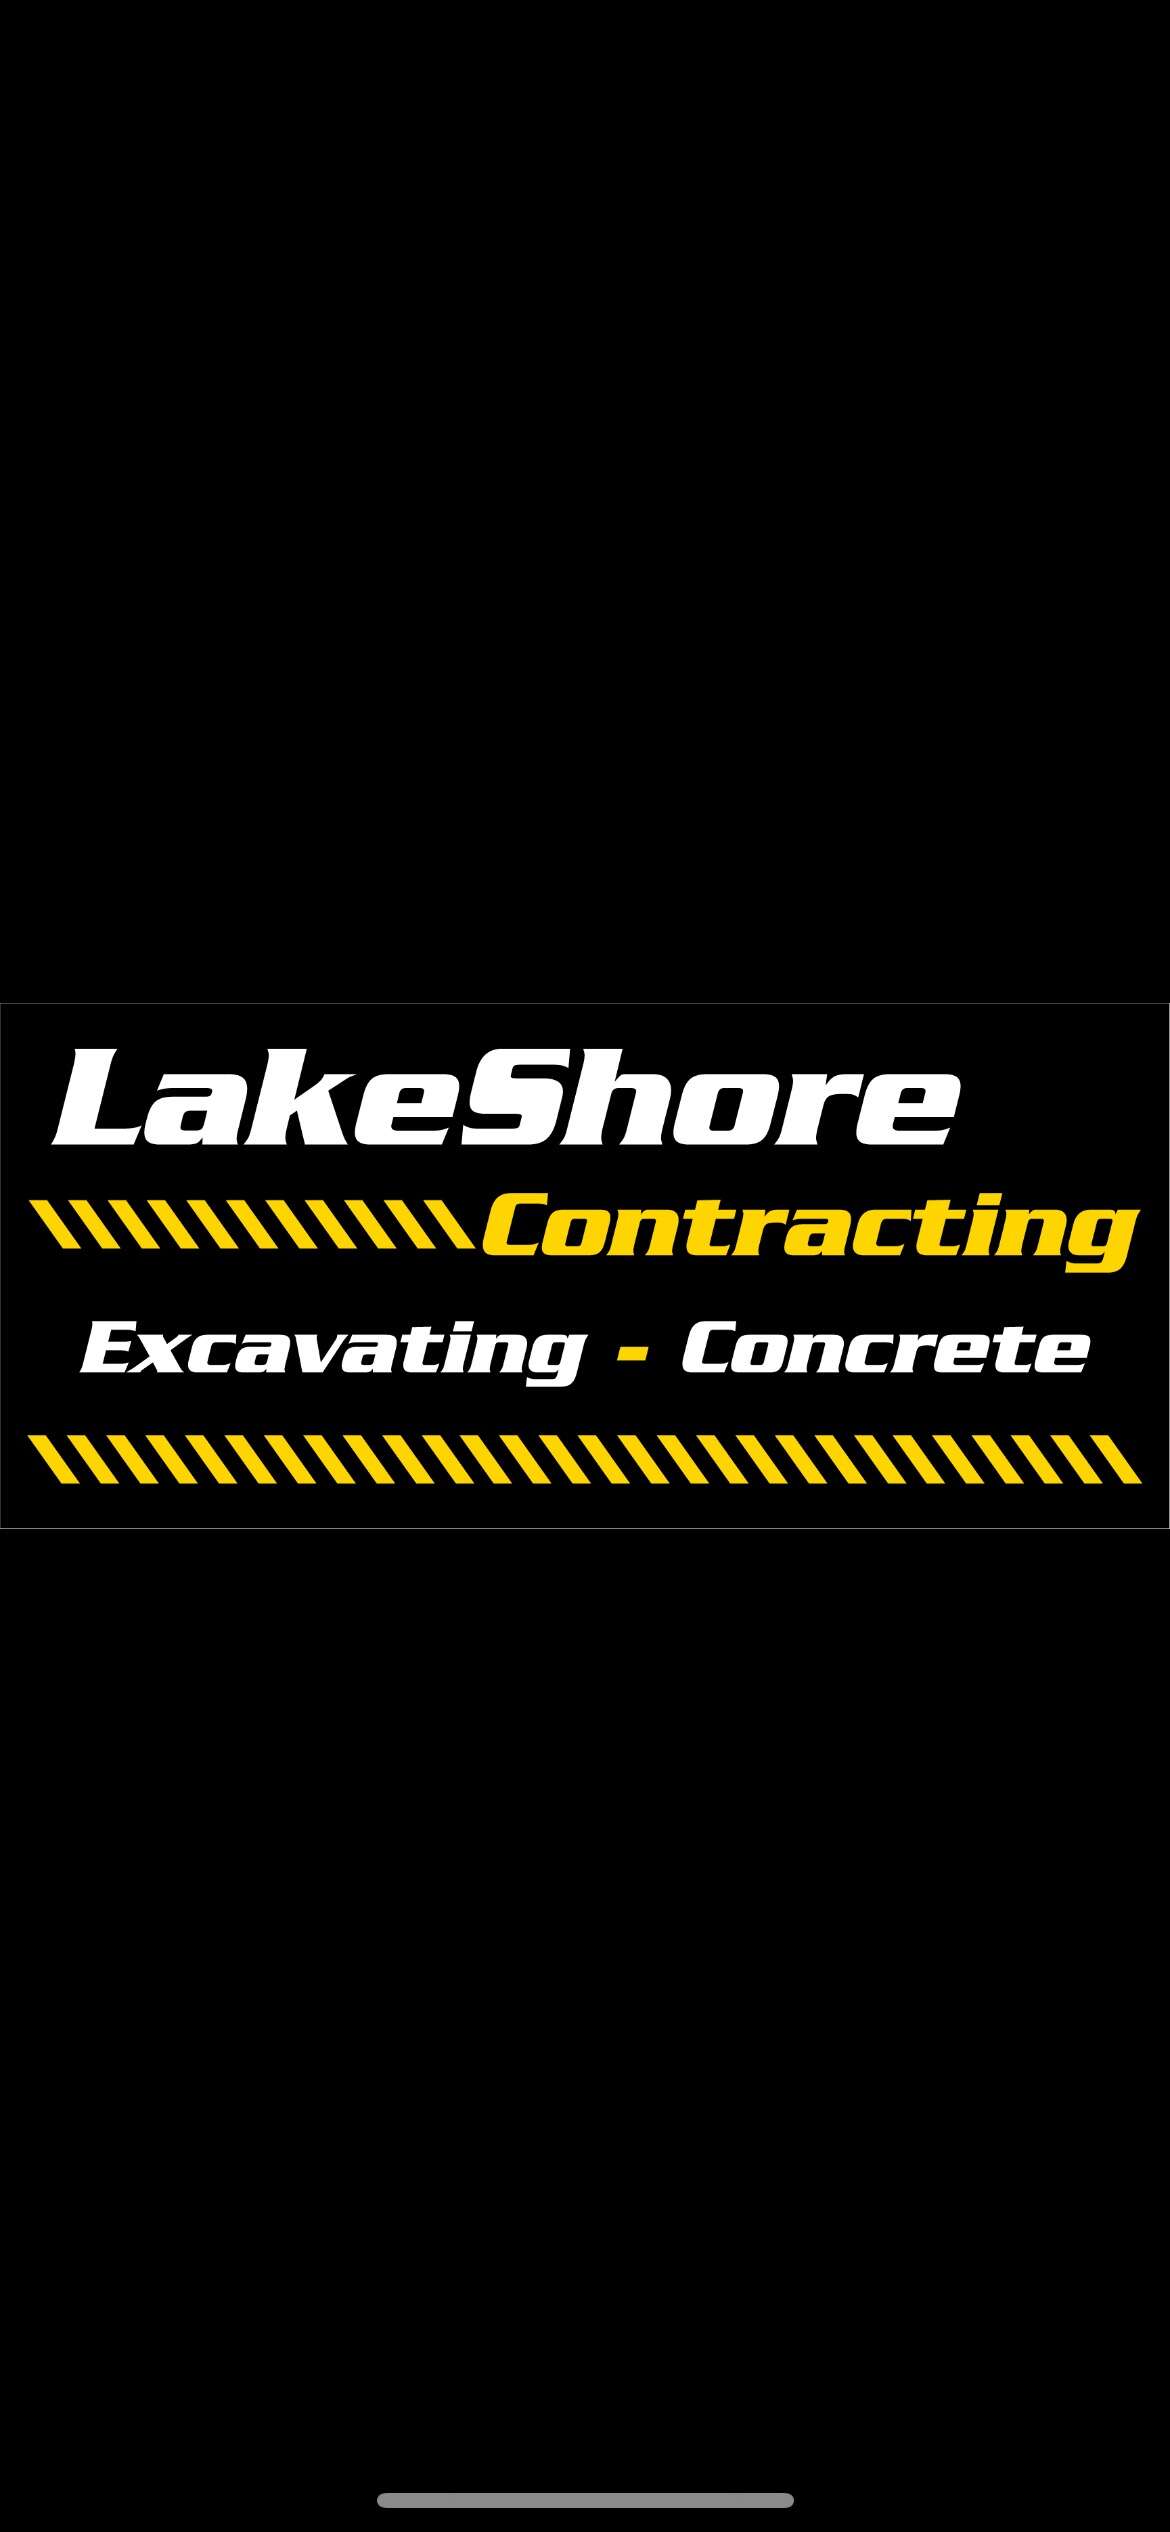 LAKESHORE Contracting